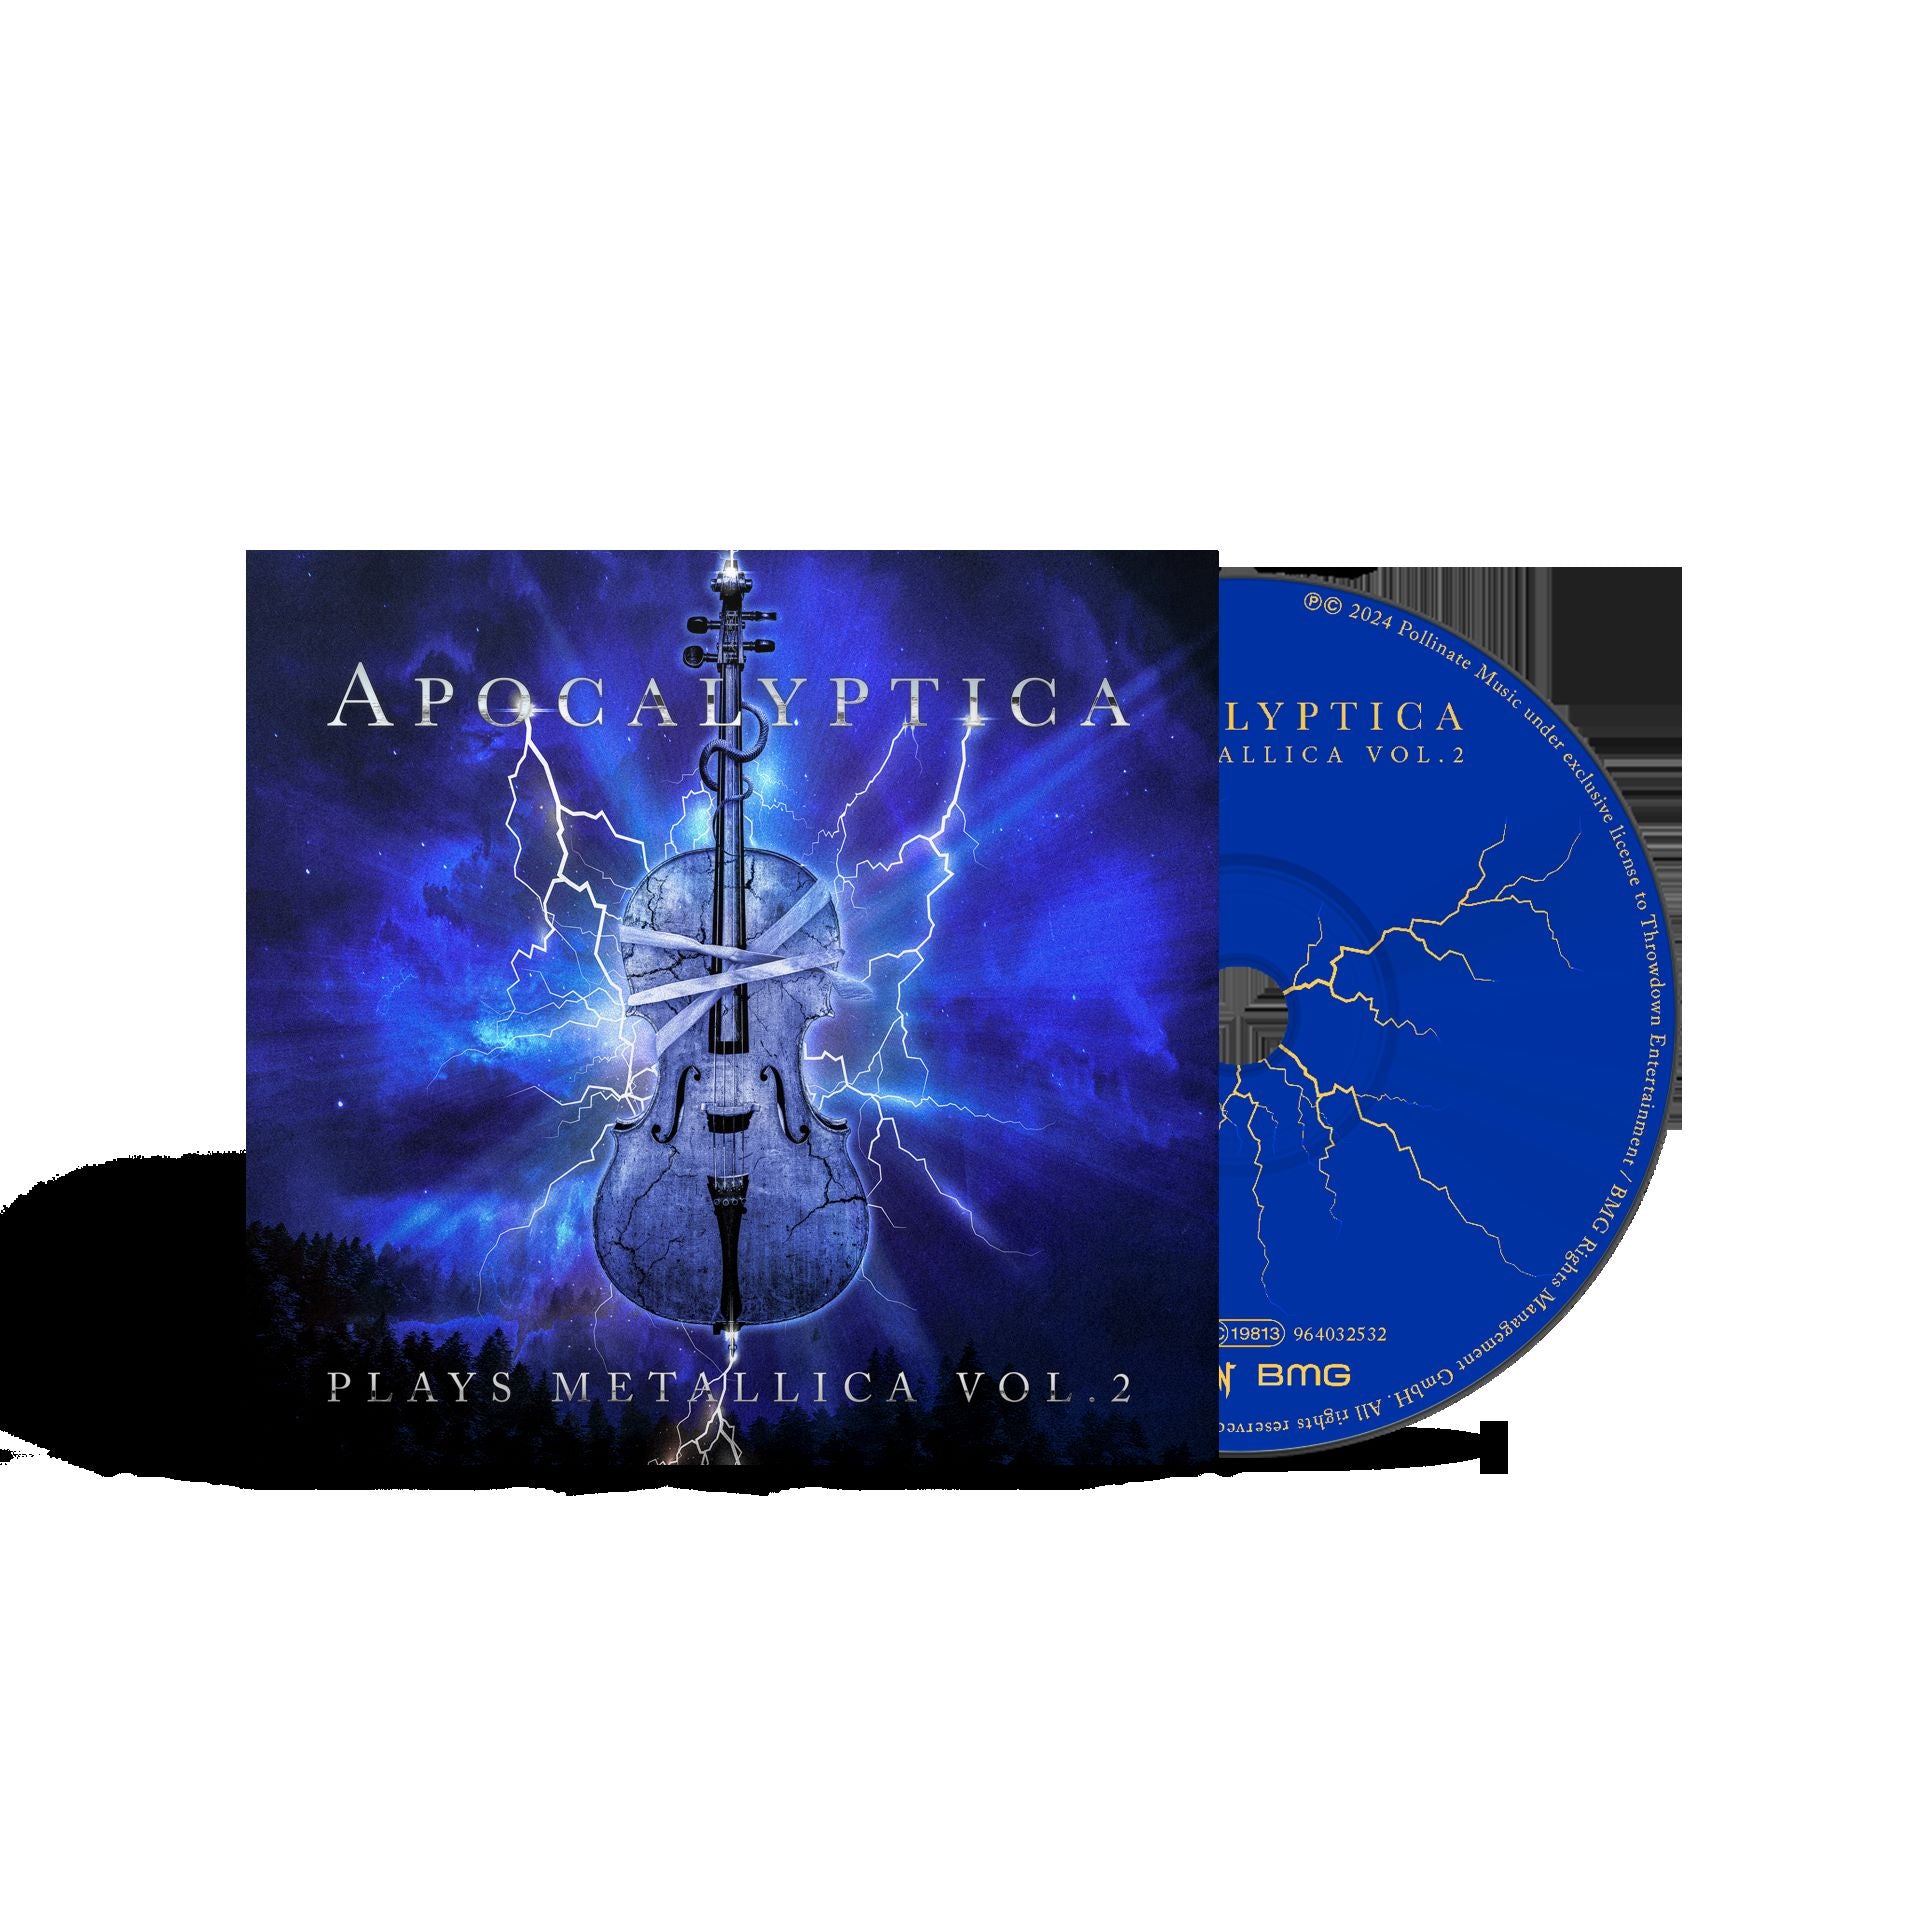 Apocalyptica "Plays Metallica, Vol 2" CD - PRE-ORDER